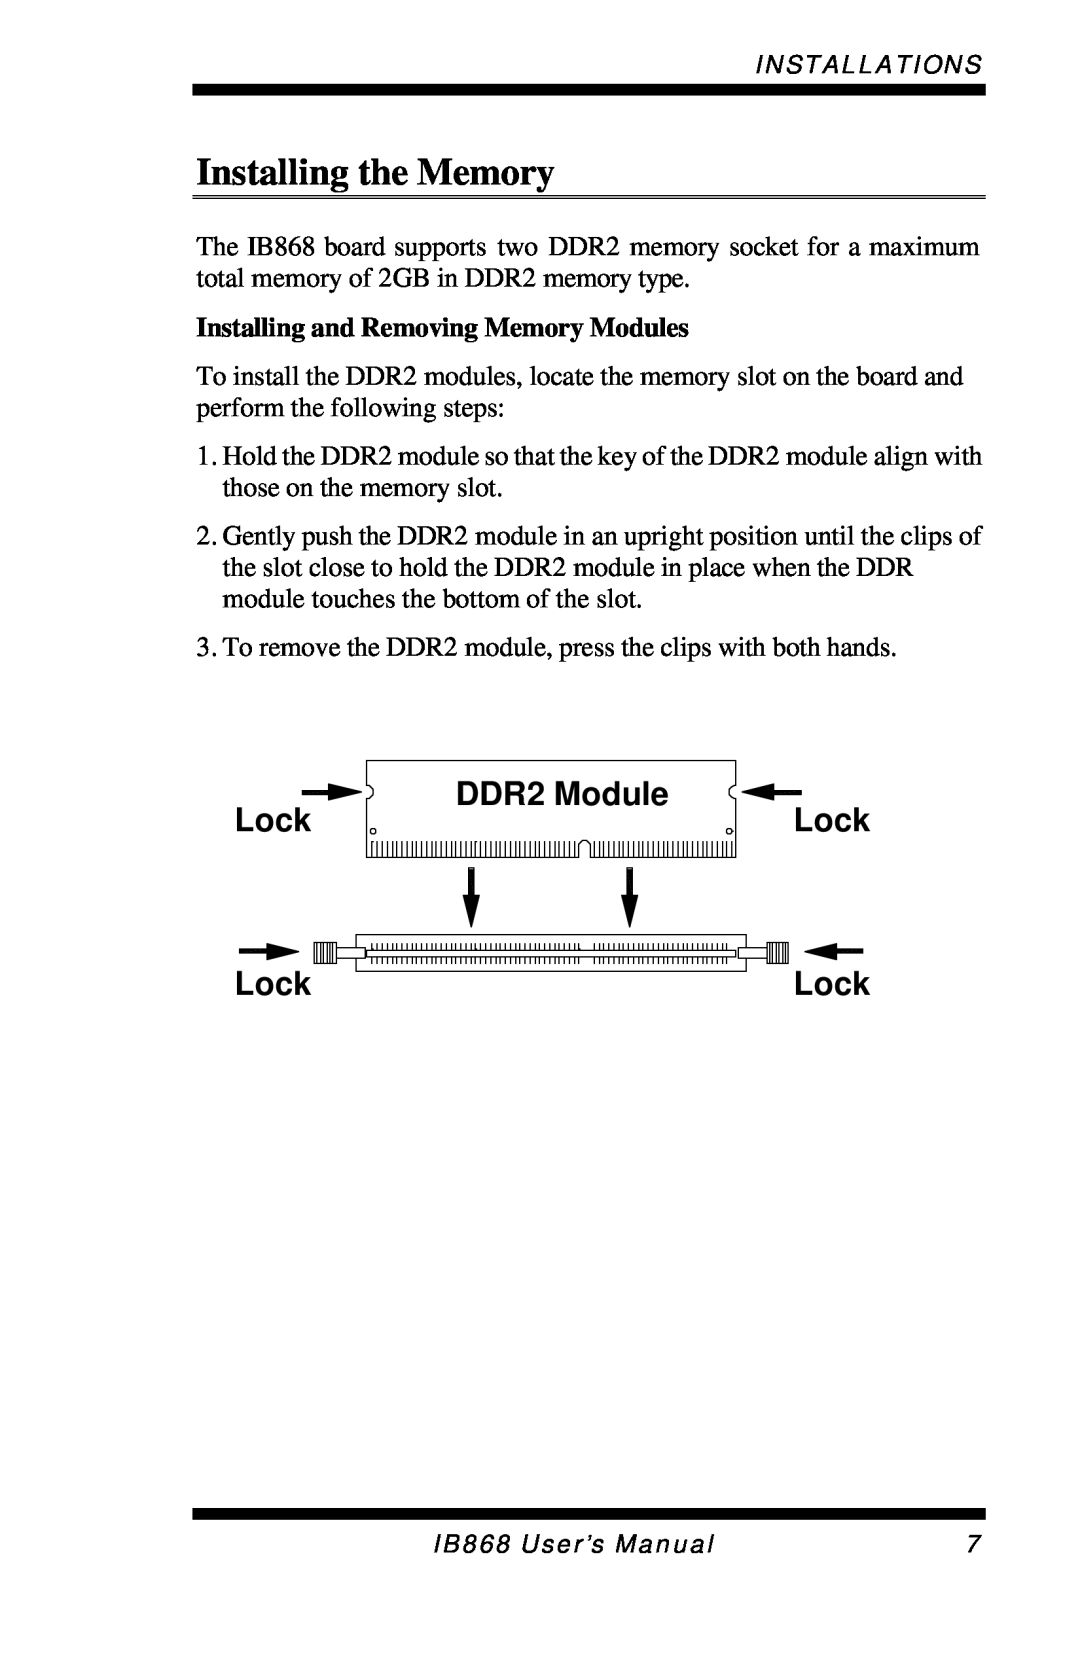 Intel IB868 user manual Installing the Memory, DDR2 Module Lock 